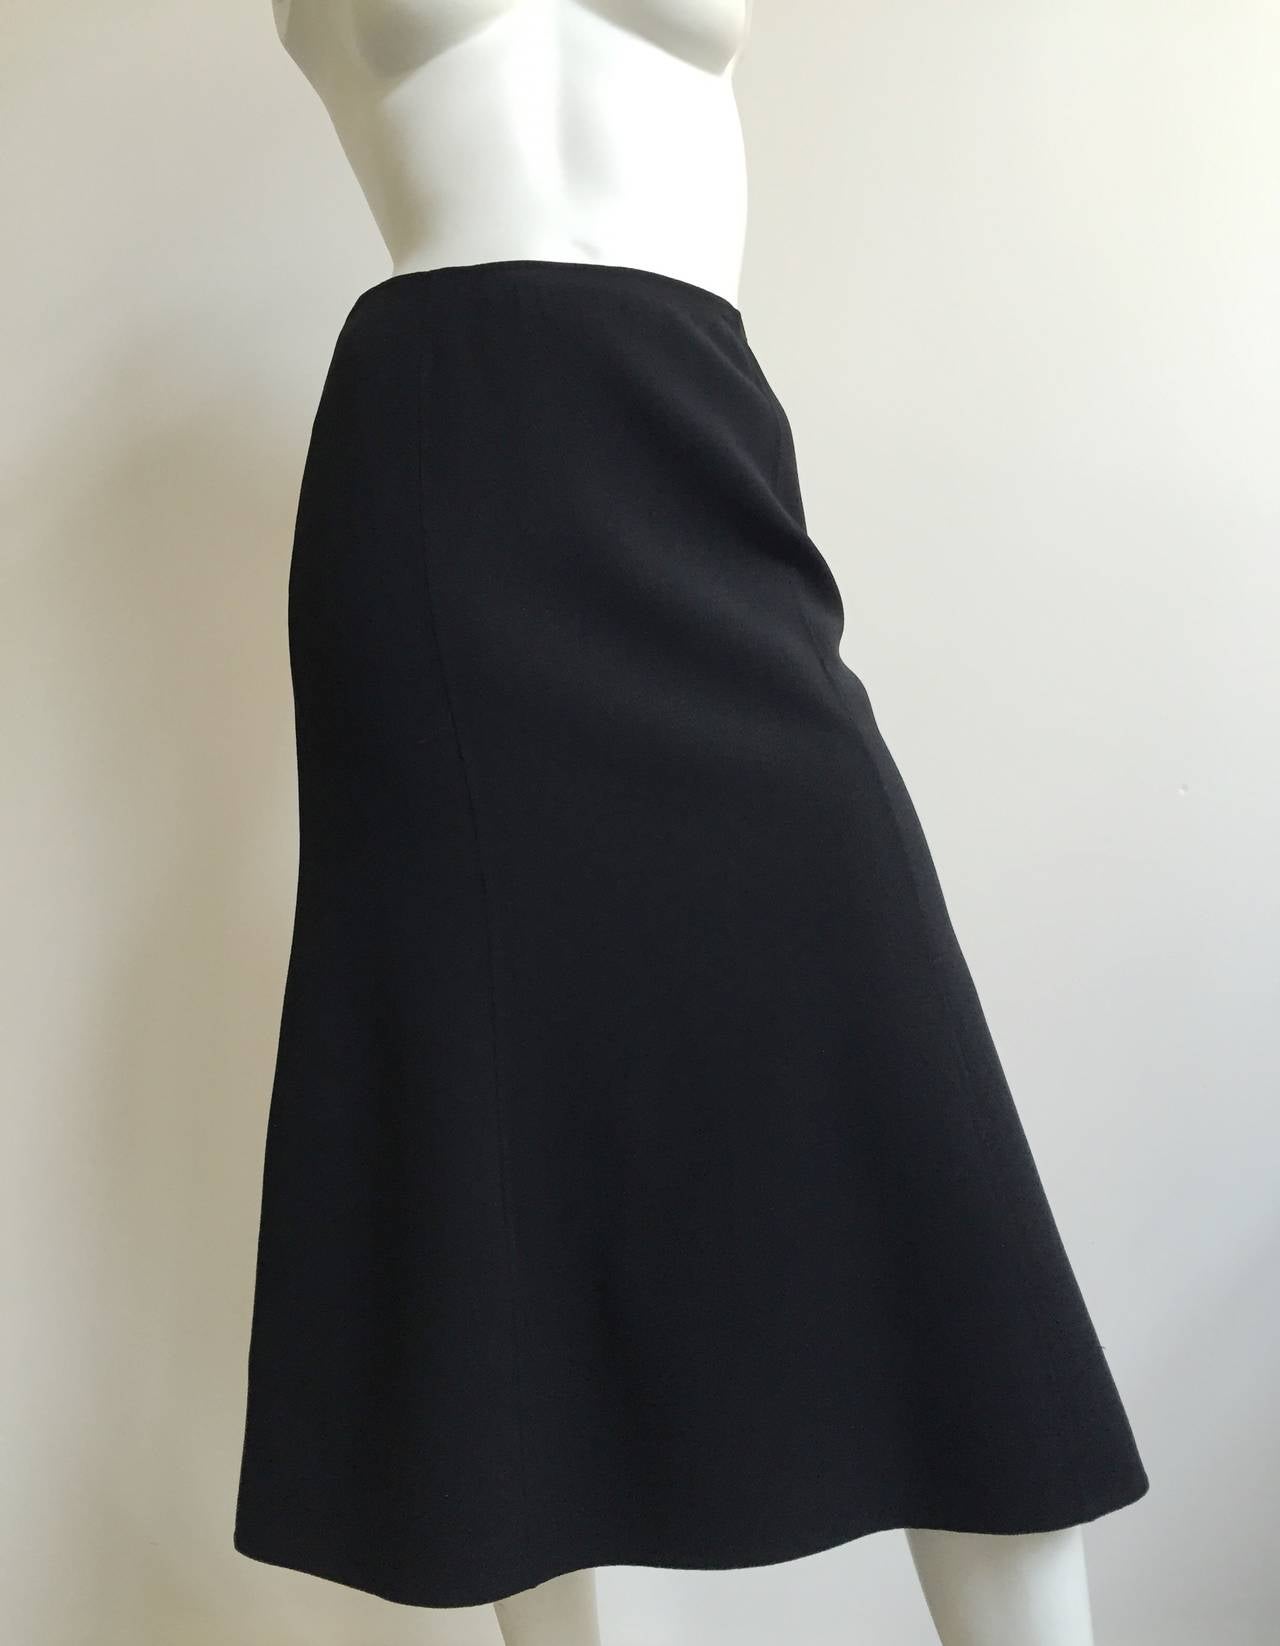 Celine black wool skirt size 4/6. 6